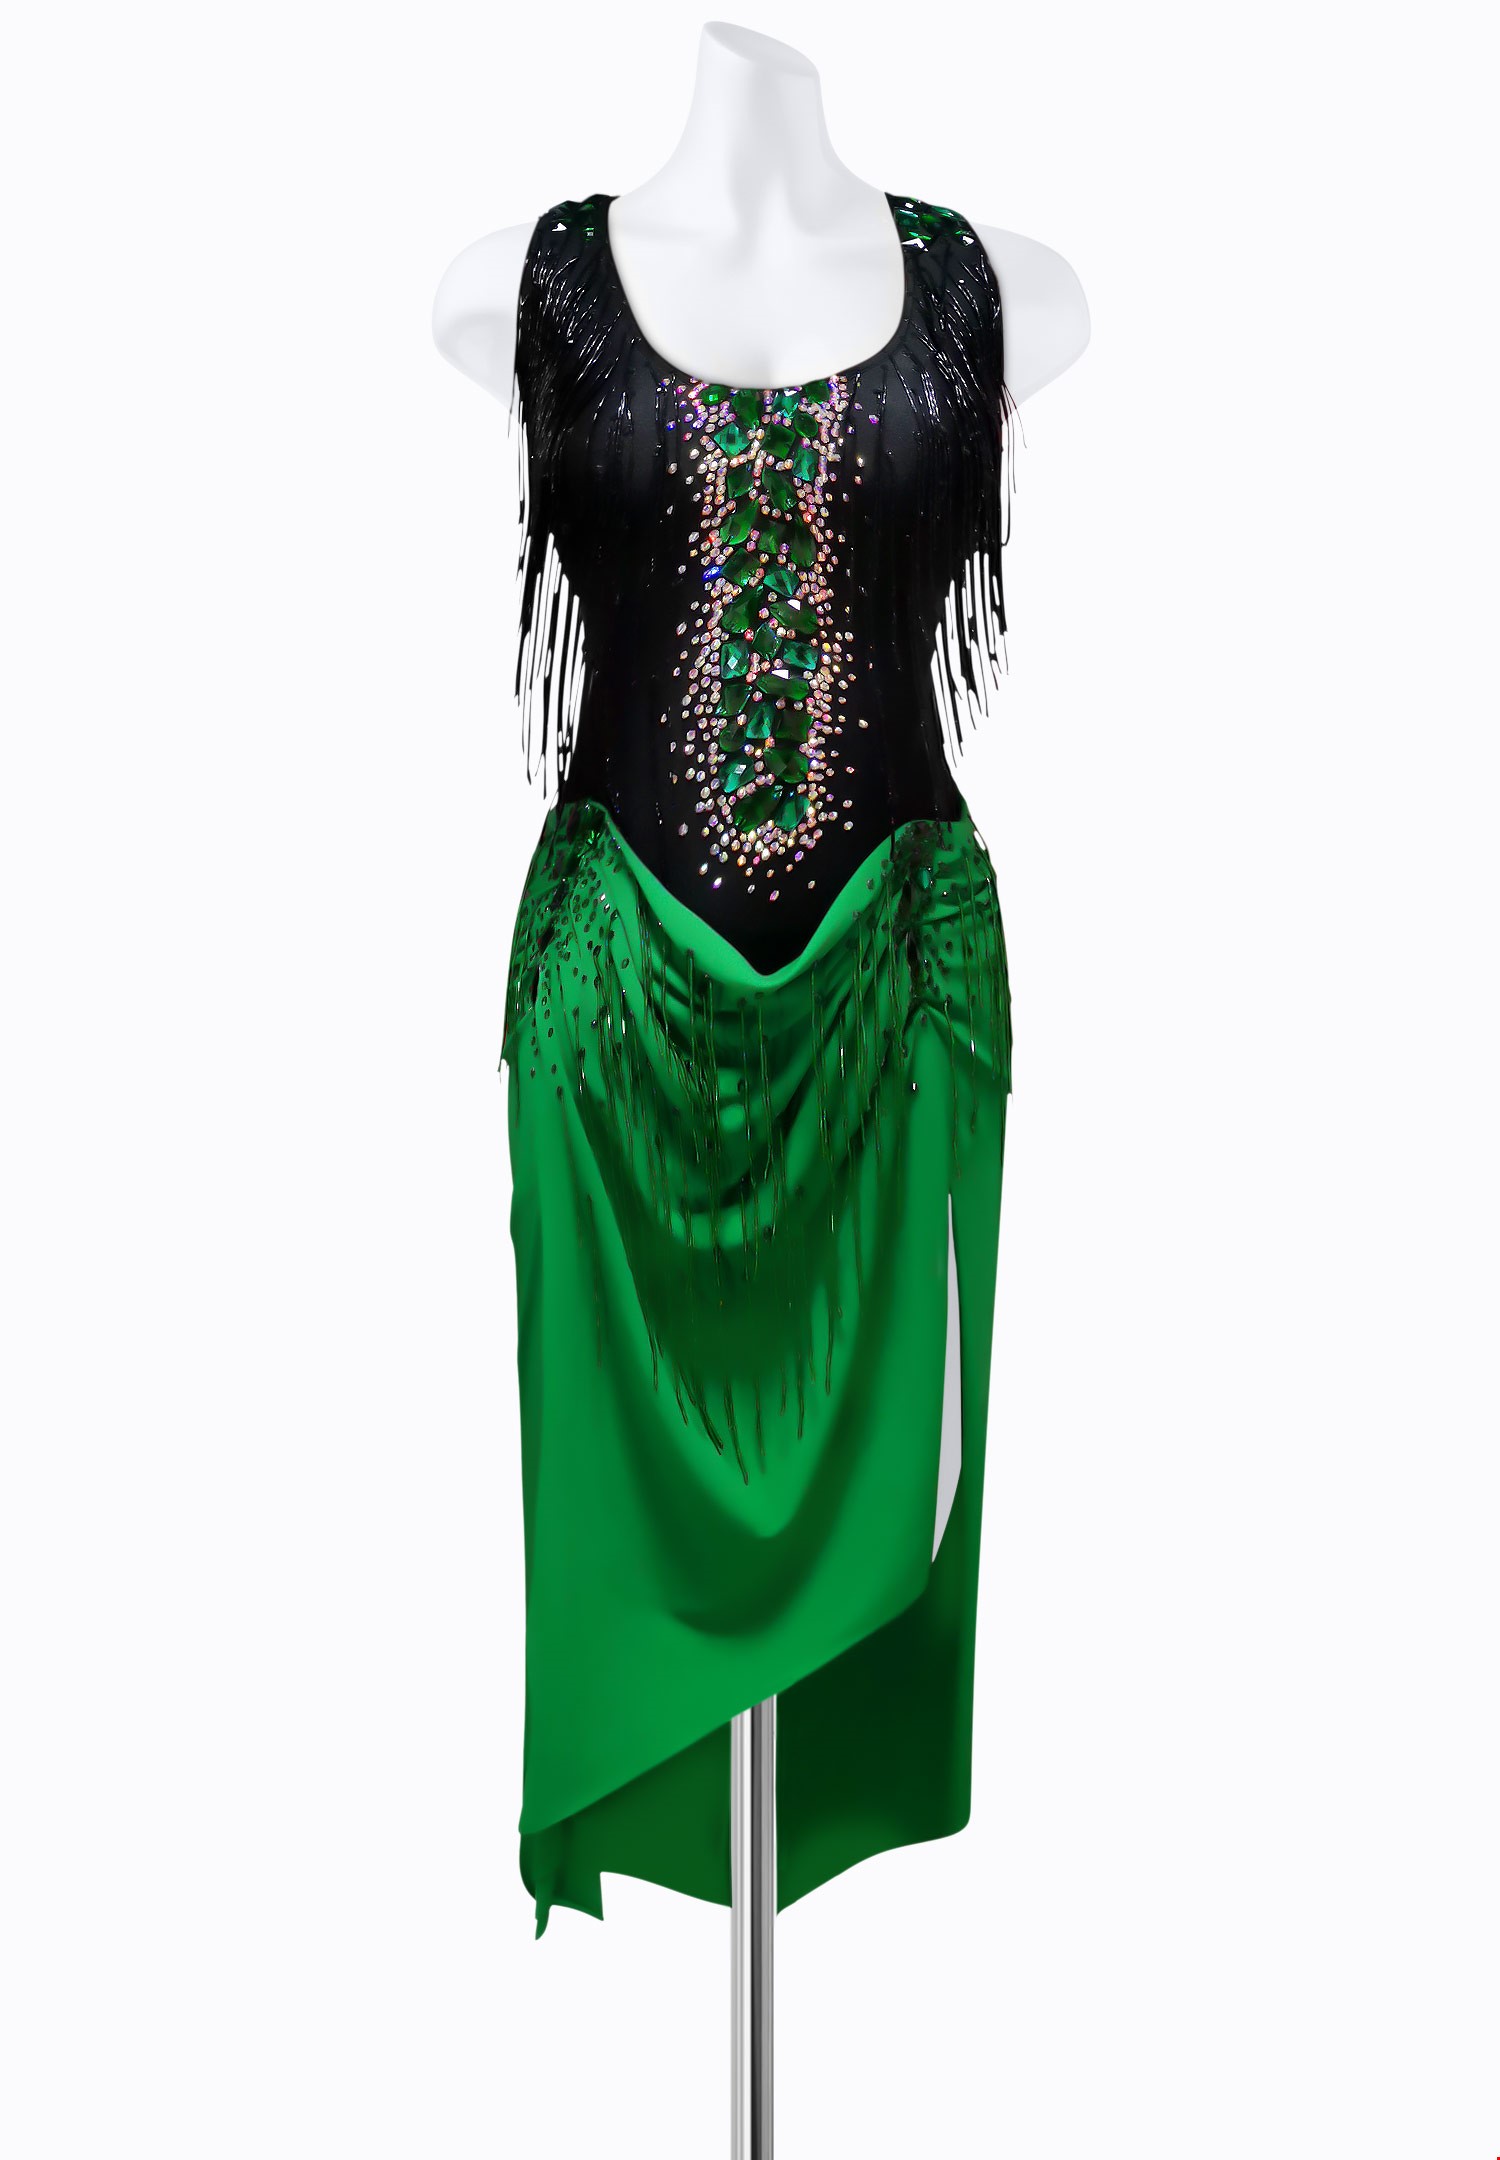 OAHU Chiffon Maxi Dress with Bow Straps (Emerald Green Chiffon)